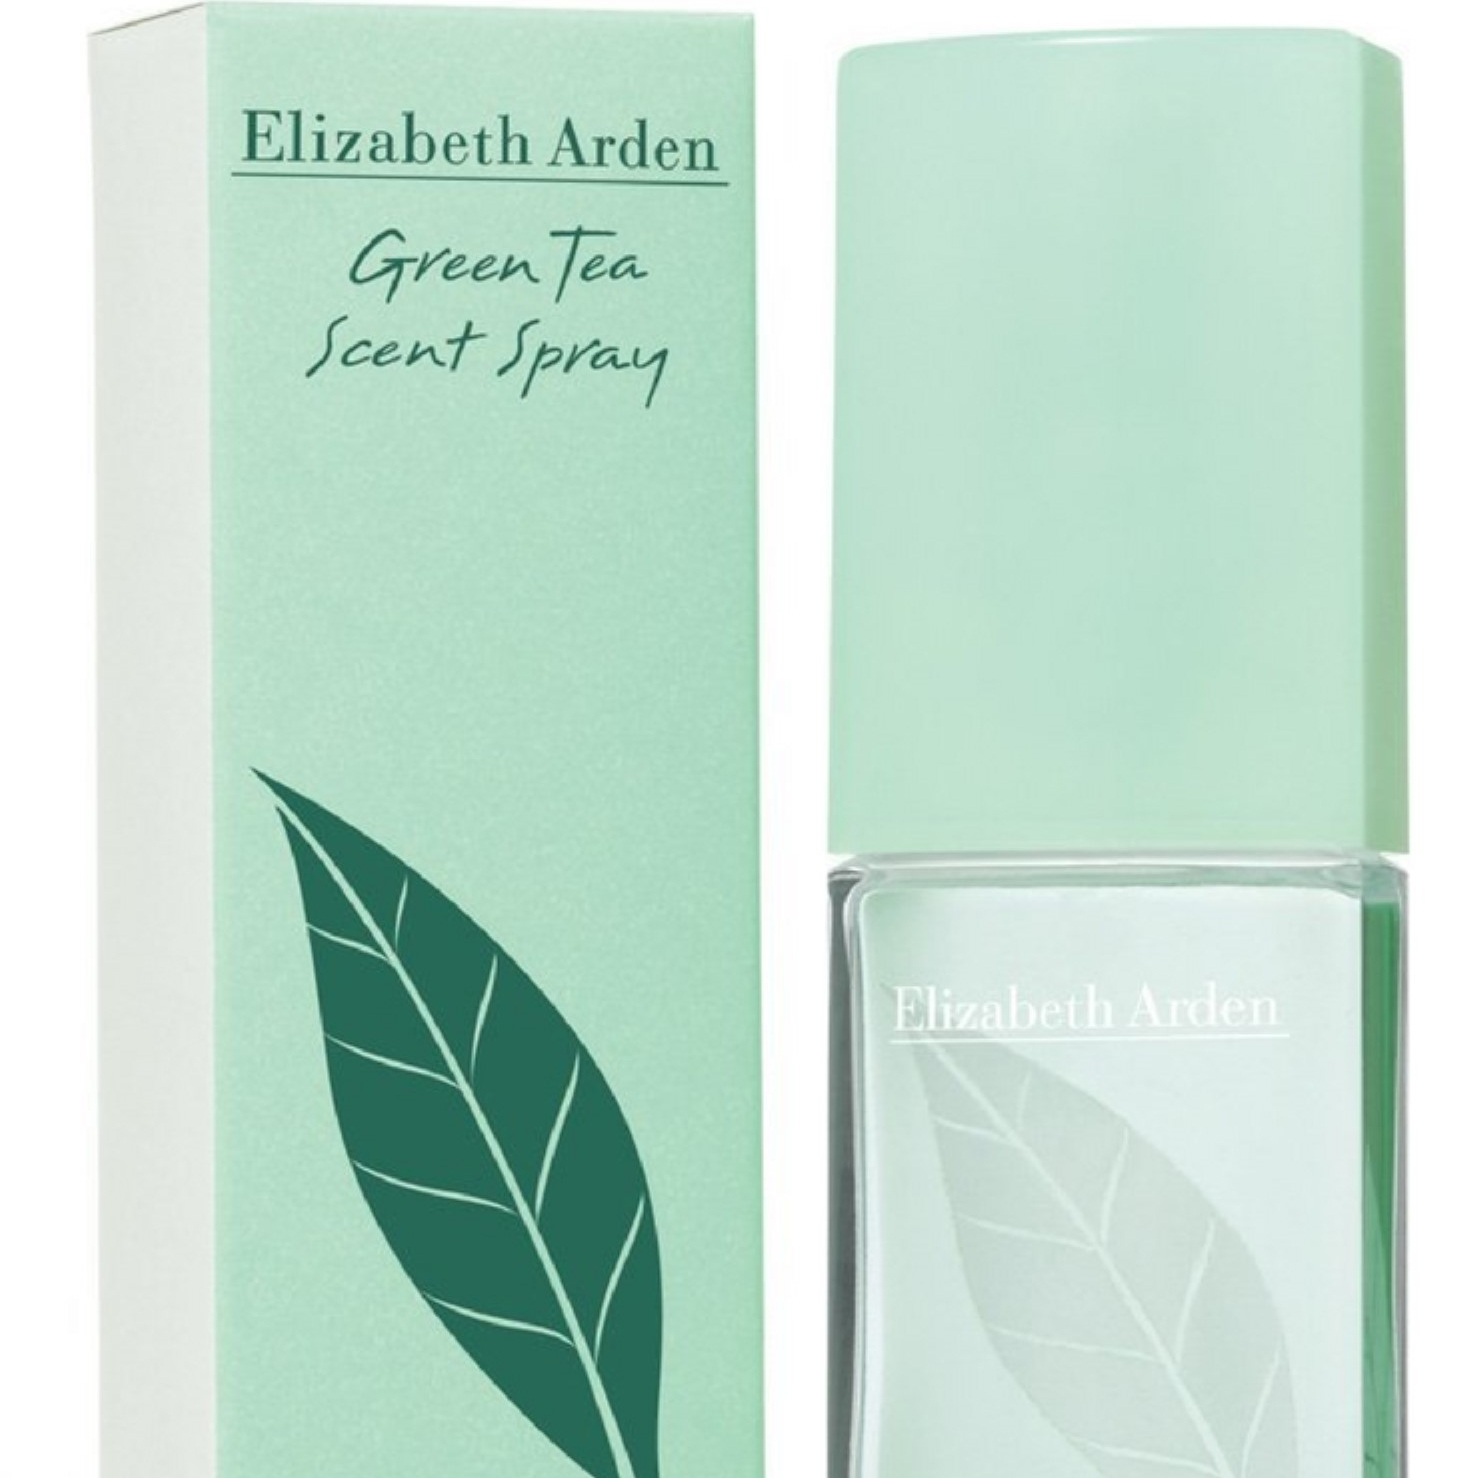 Elizabeth Arden Green Tea Perfume Spray for Women, 3.4 Oz - image 3 of 3